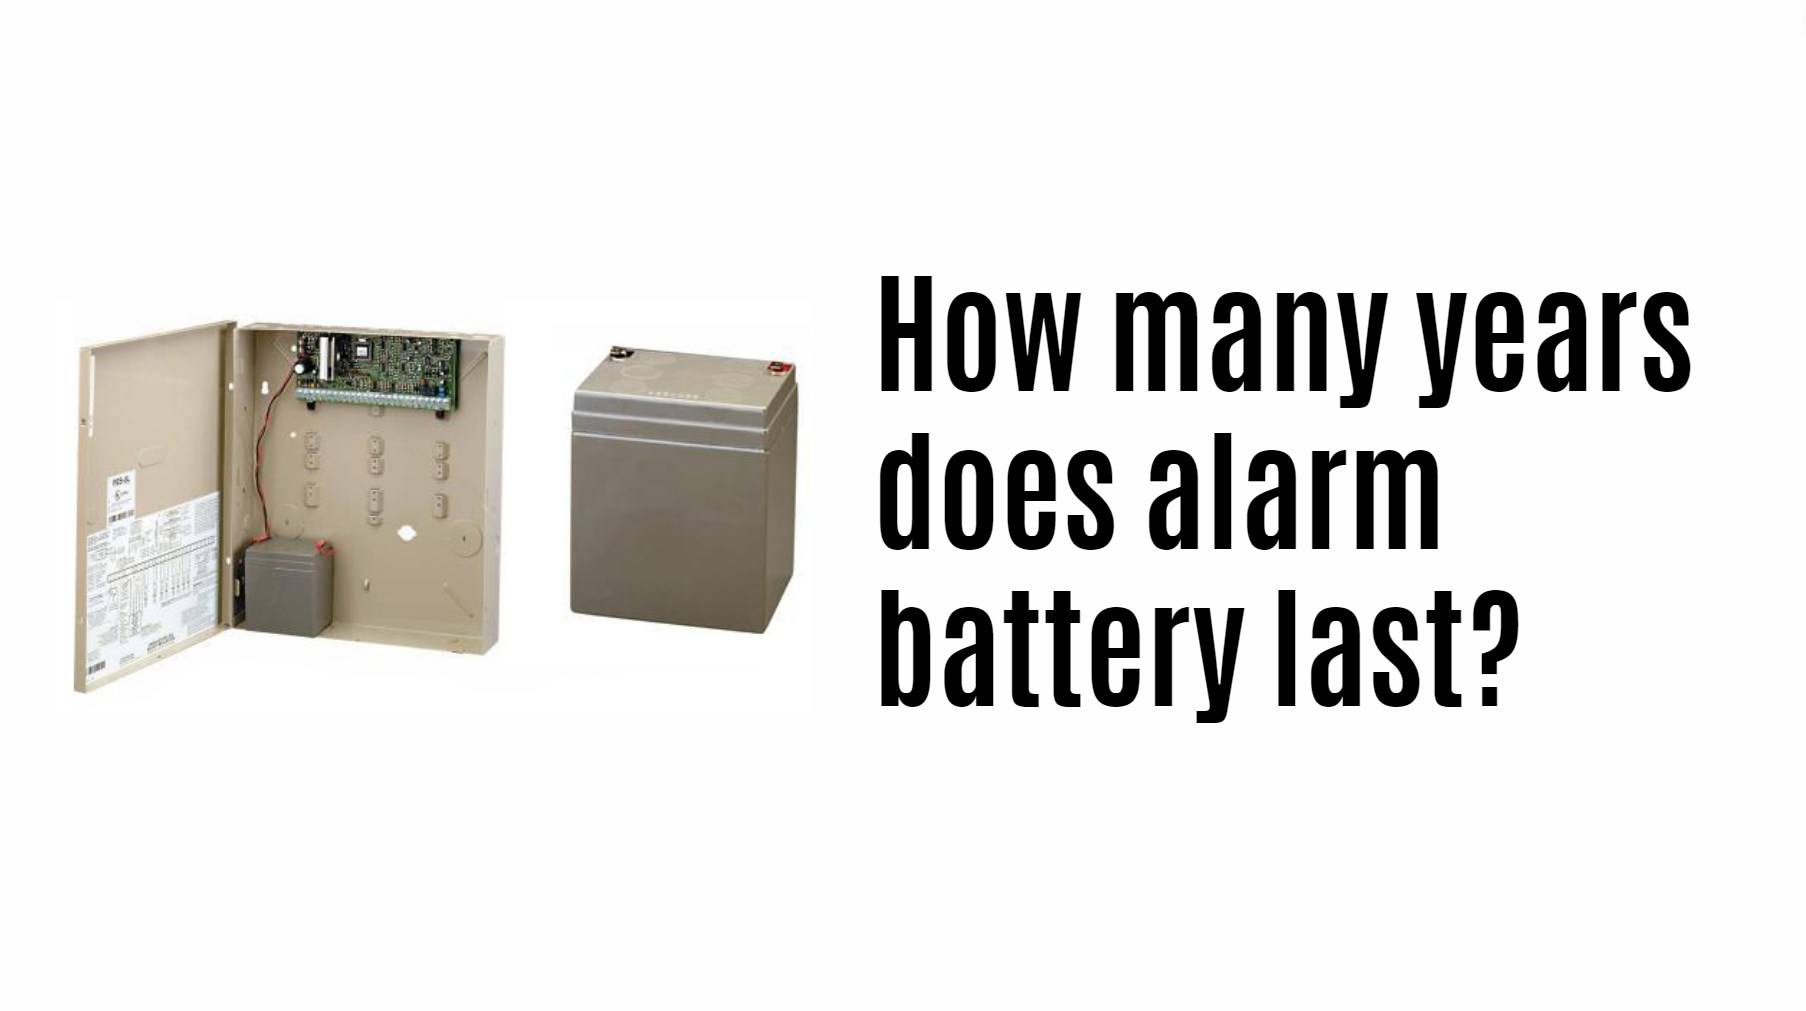 How many years does alarm battery last?